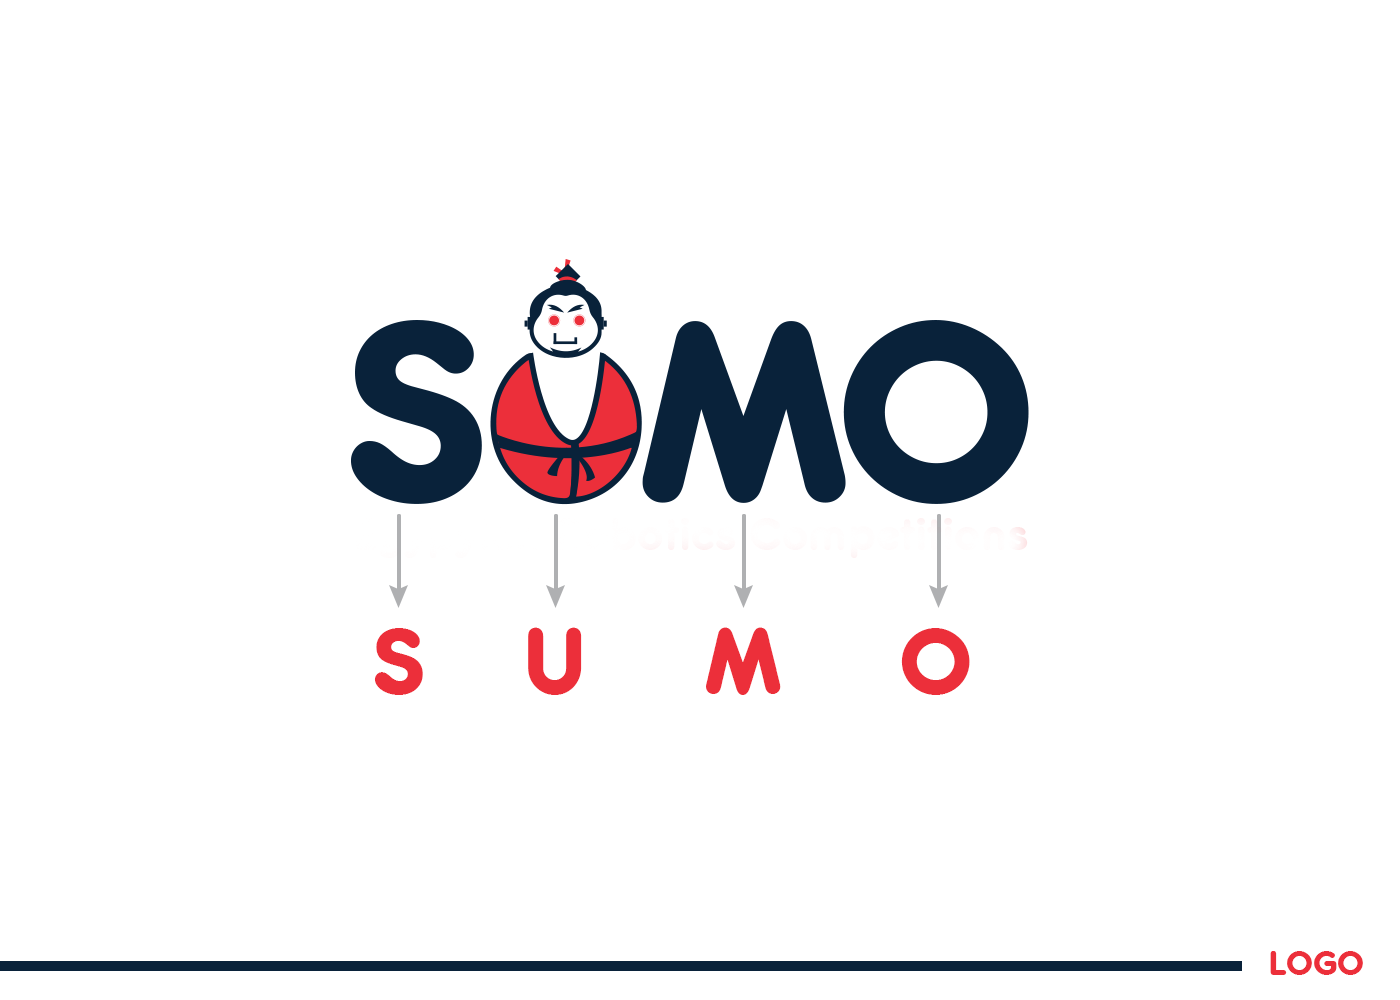 sumo robotics logo Sumo robotics Engineering  Competition science and technology science Technology SUMO ROBOTICS EGYPT